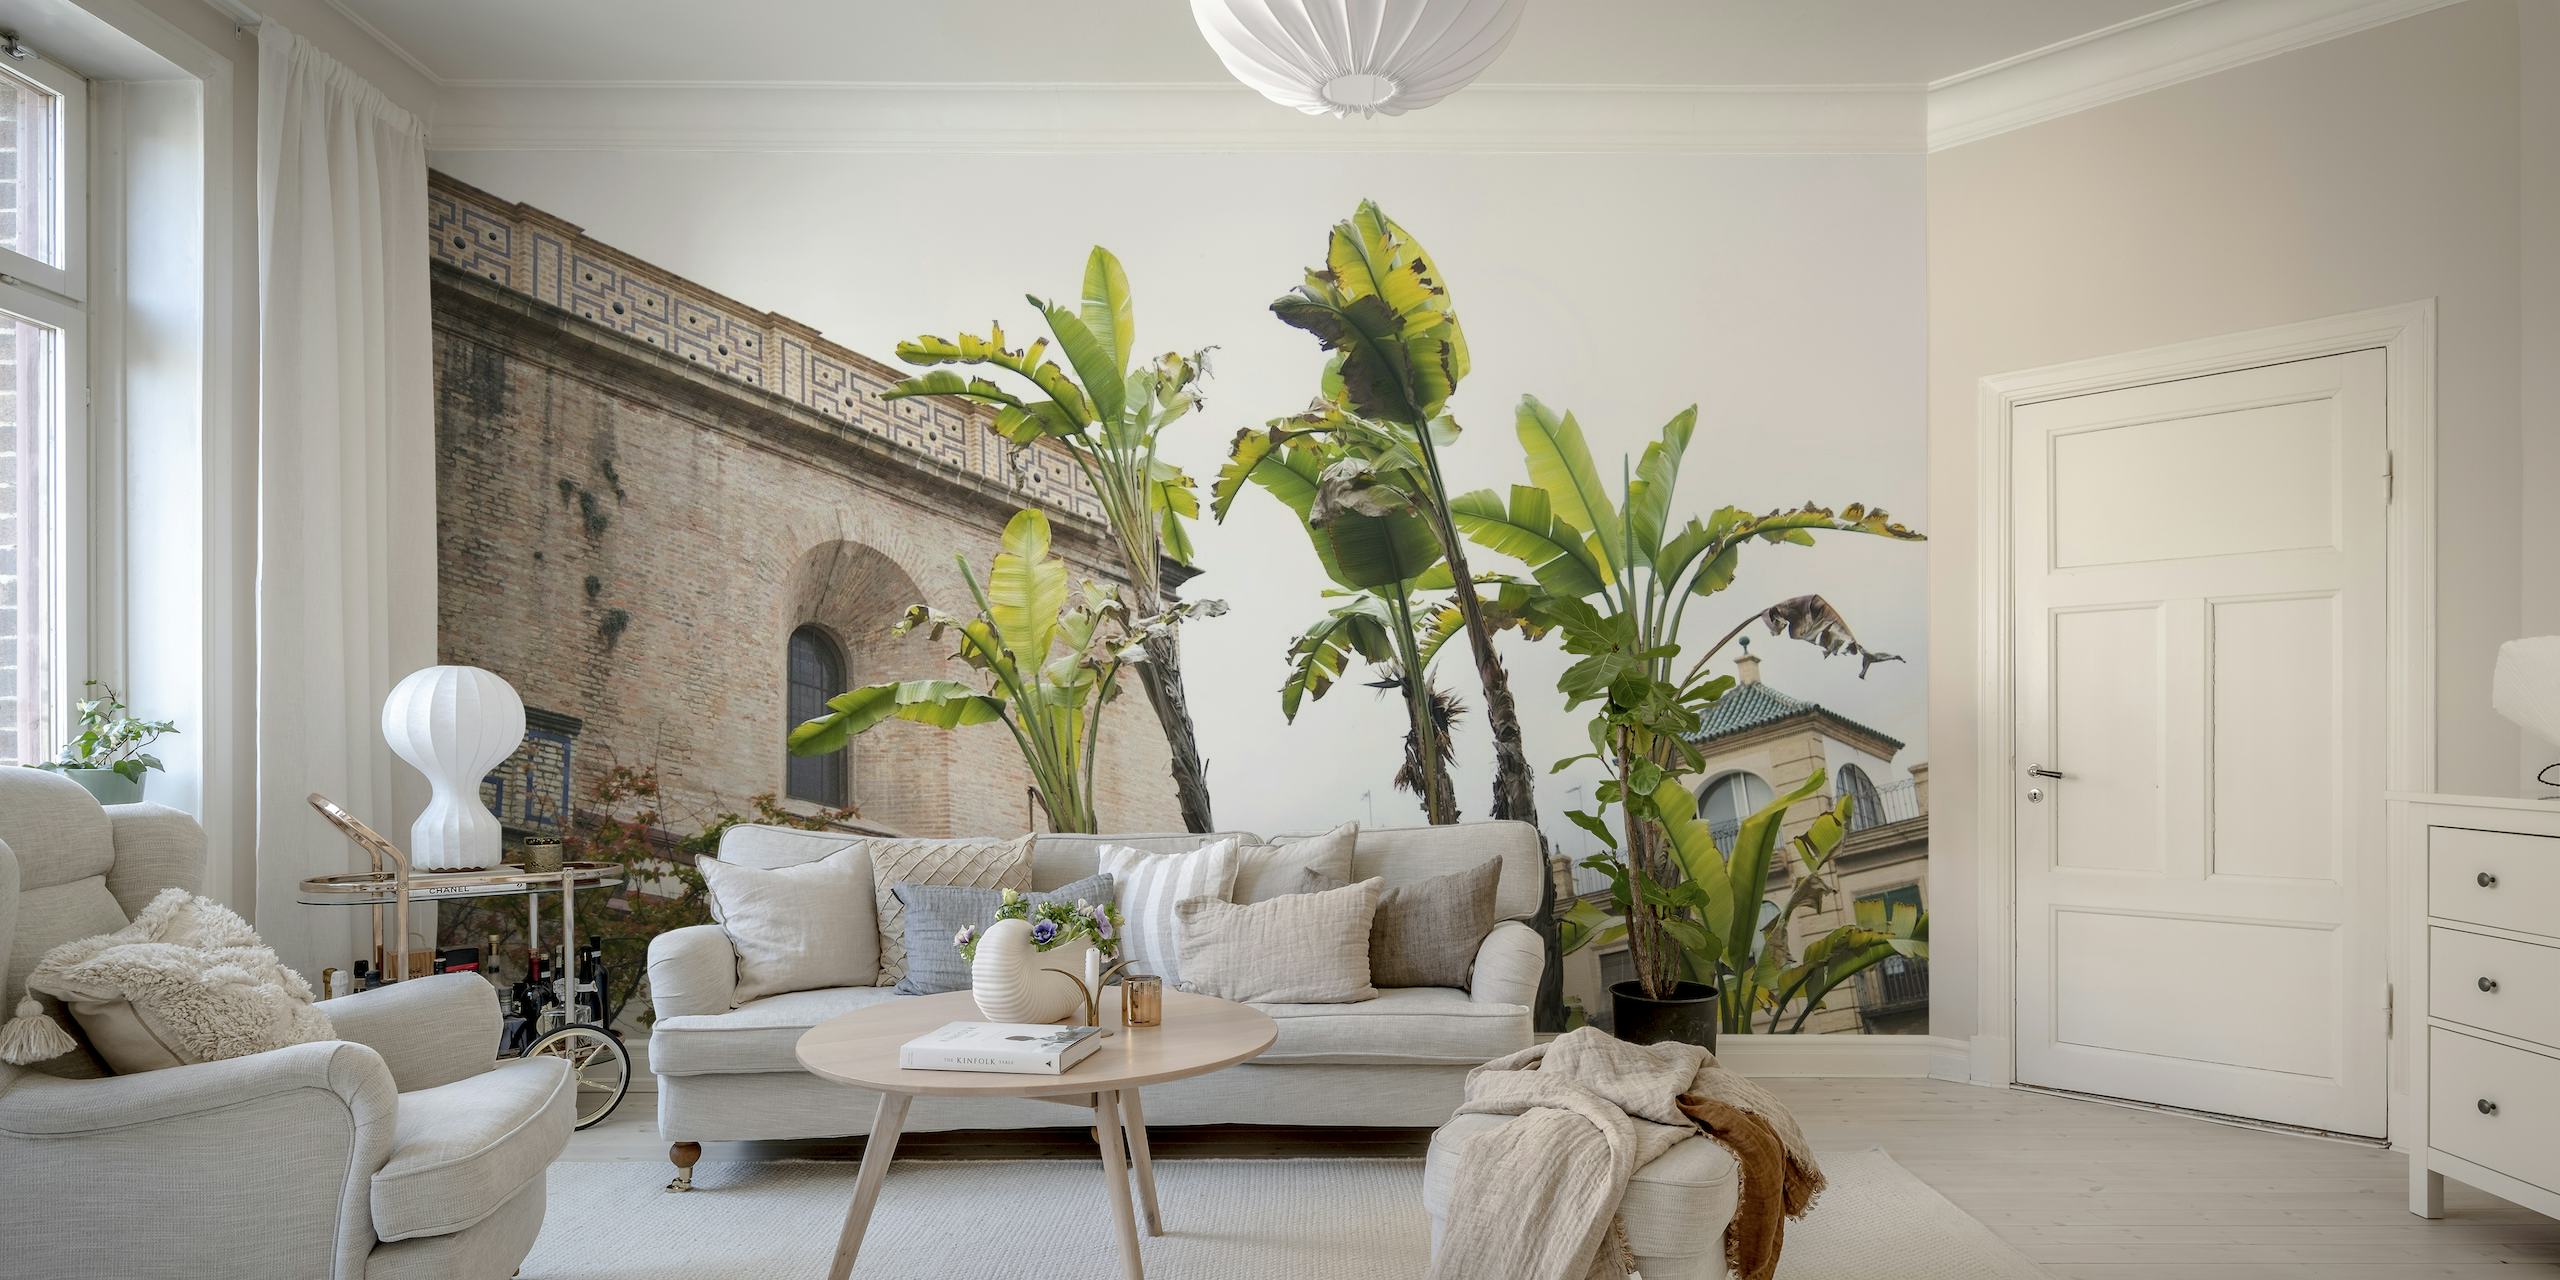 Fotomural Edificio Sevilla con planta tropical ave del paraíso blanca